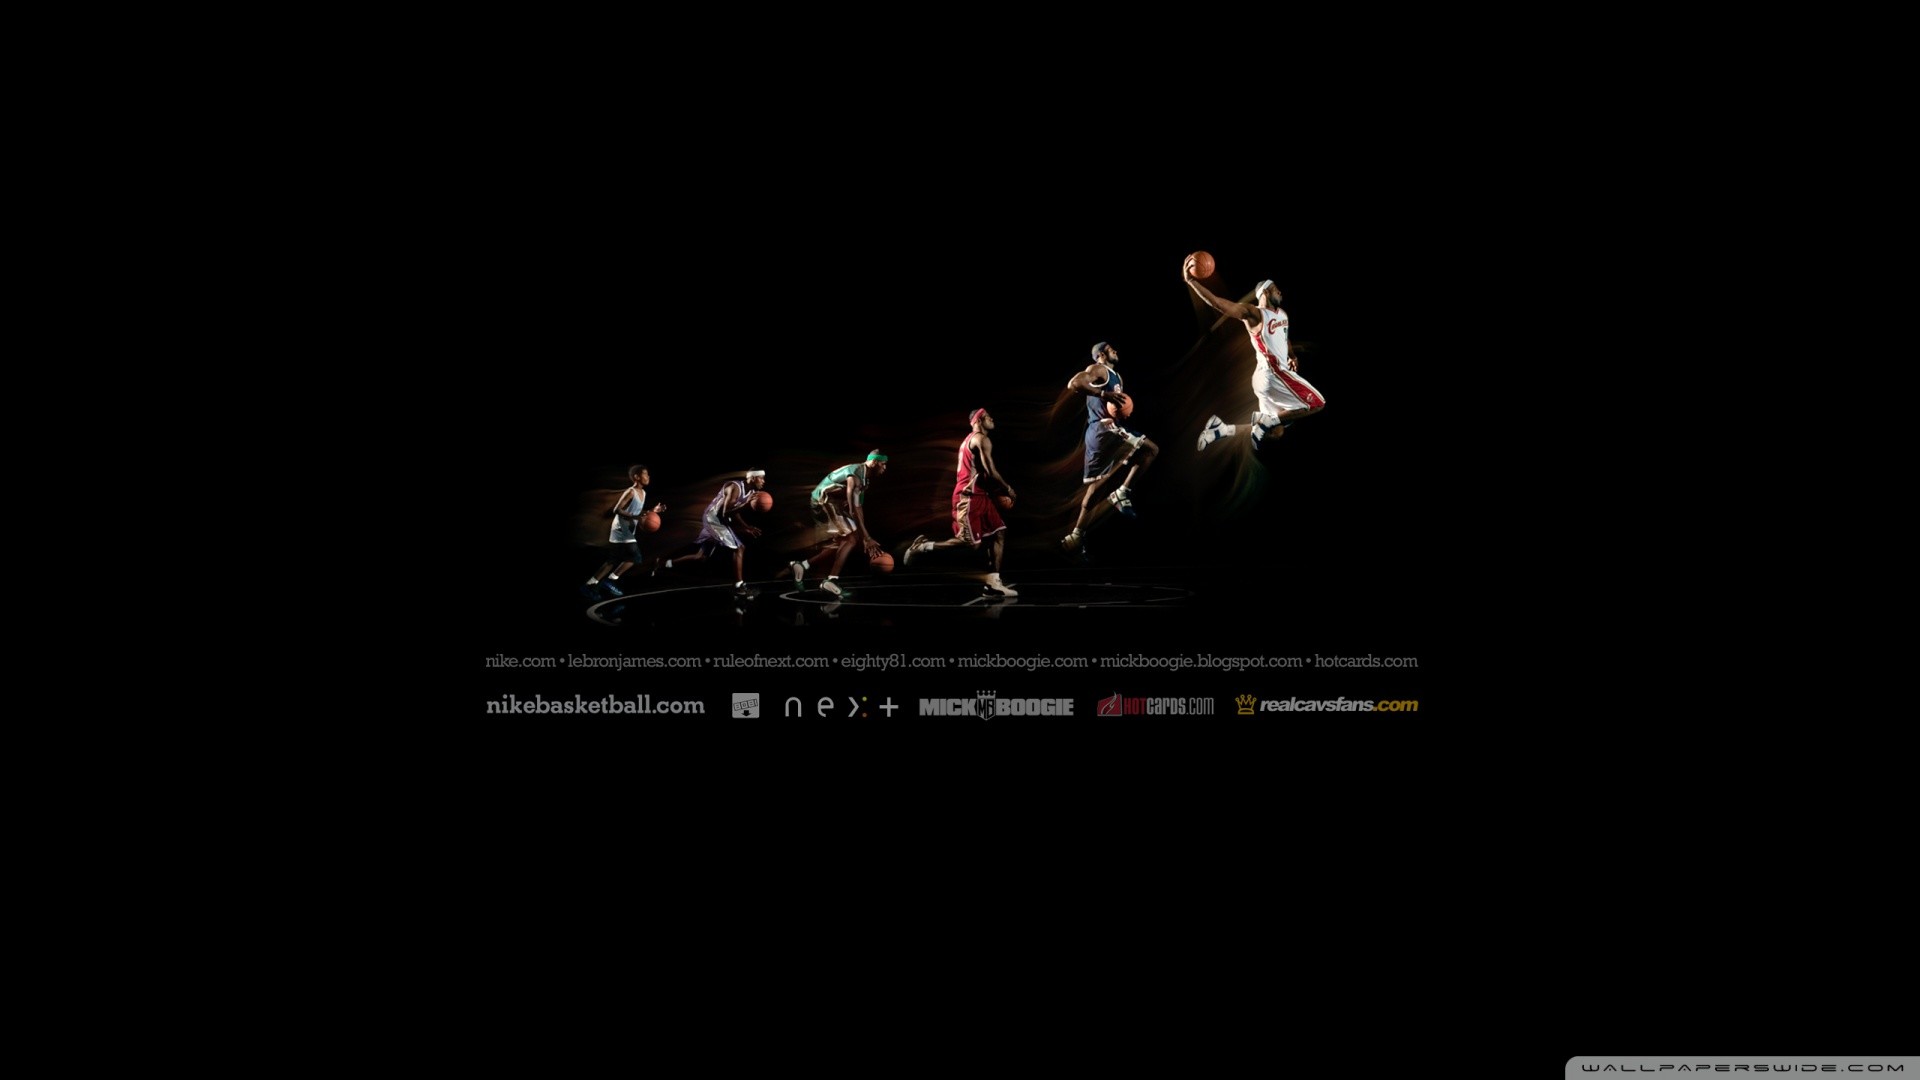 Nike Lebron Wallpaper Image